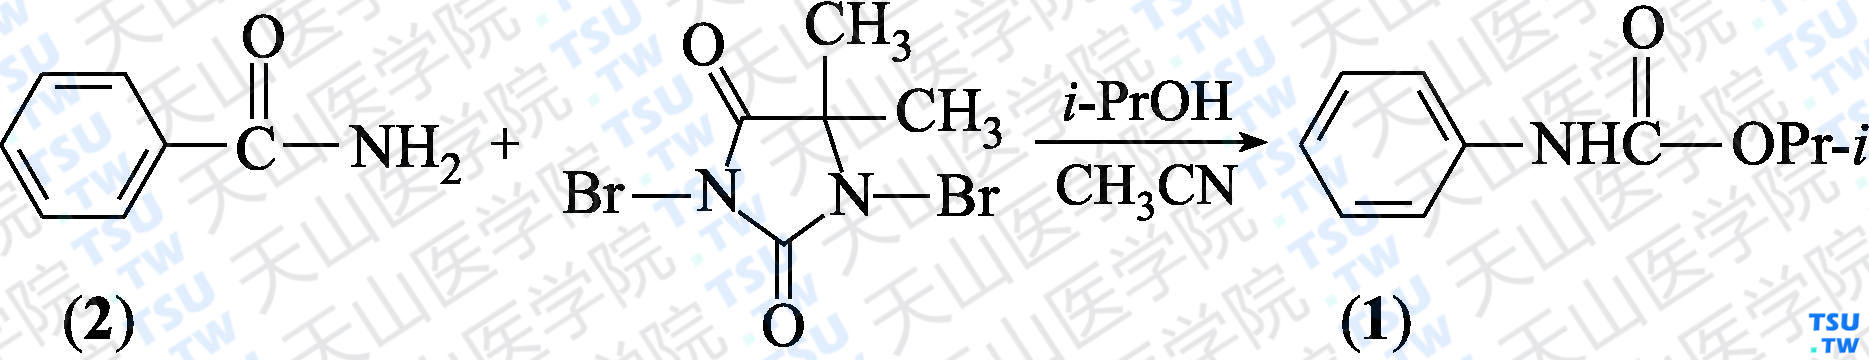 苯基氨基甲酸异丙酯（分子式：C<sub>10</sub>H<sub>13</sub>NO<sub>2</sub>）的合成方法路线及其结构式